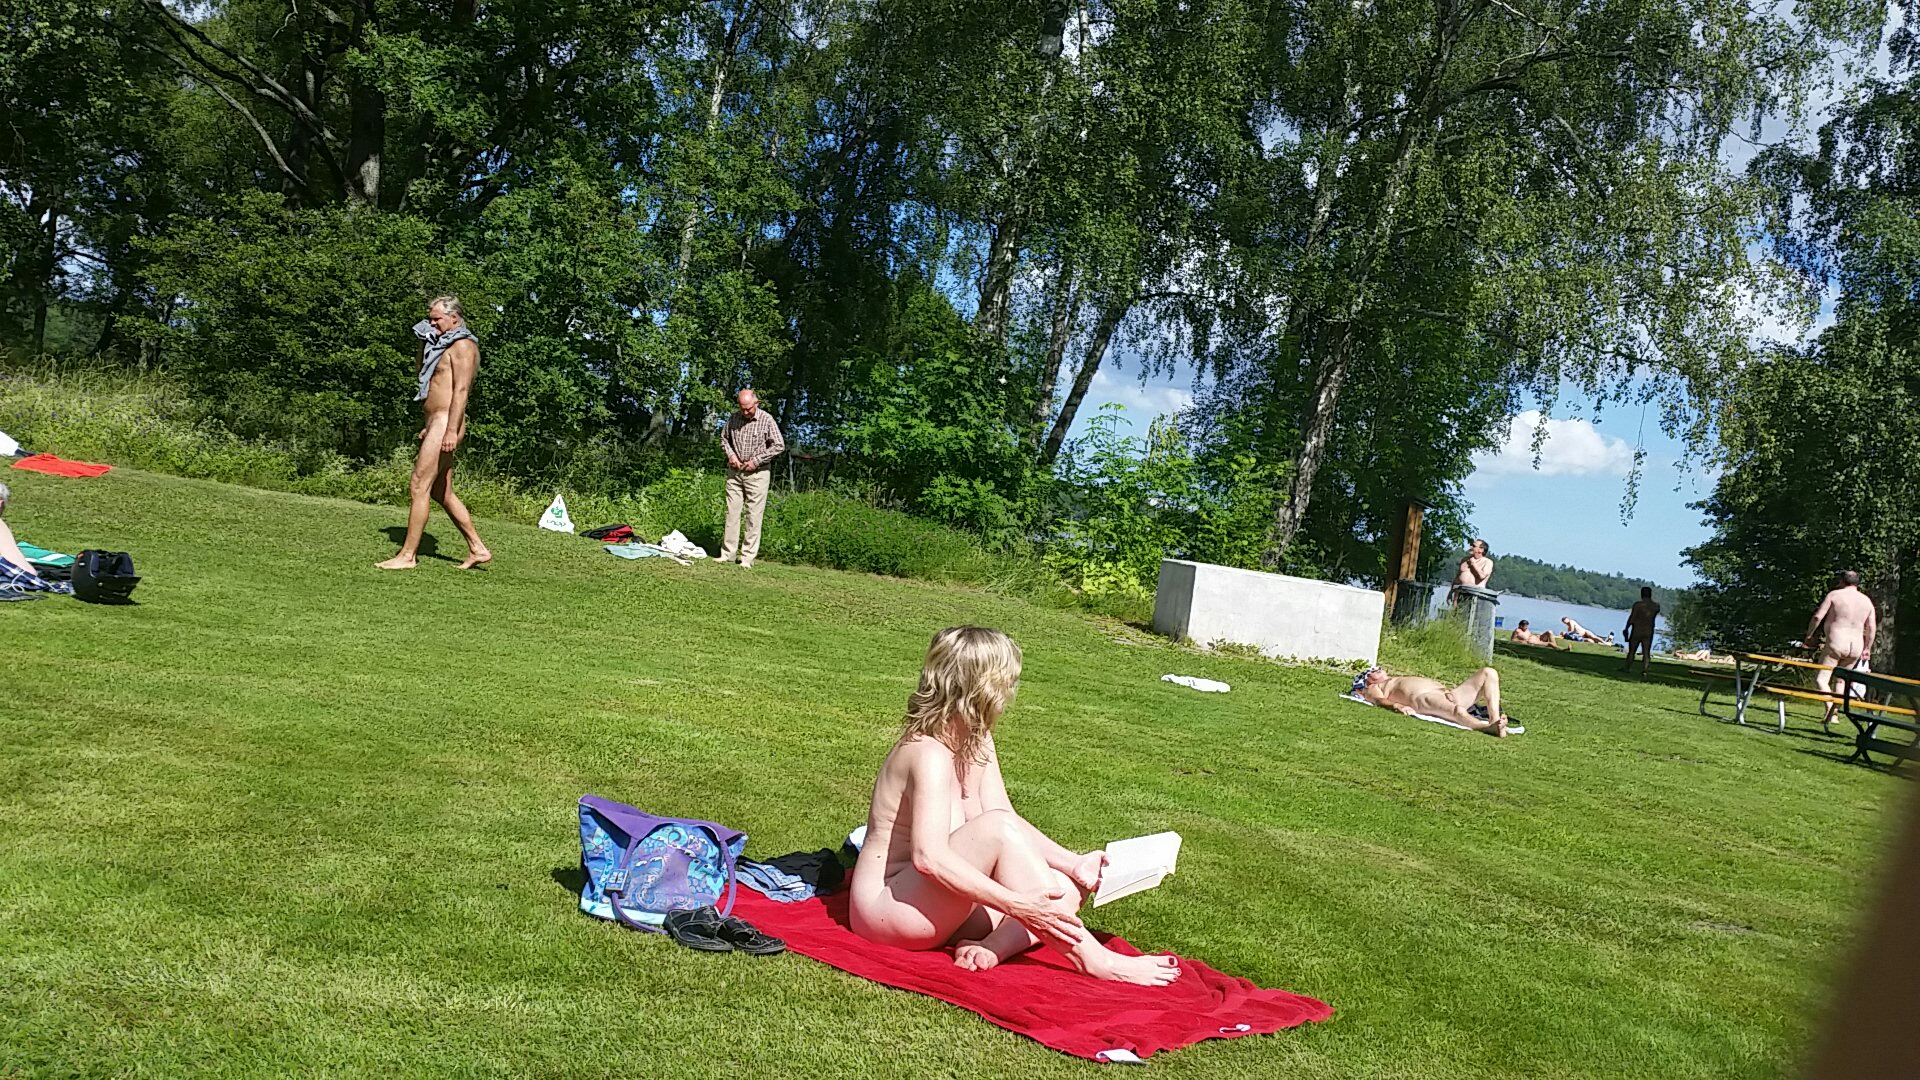 david doktor add photo nude beaches in sweden